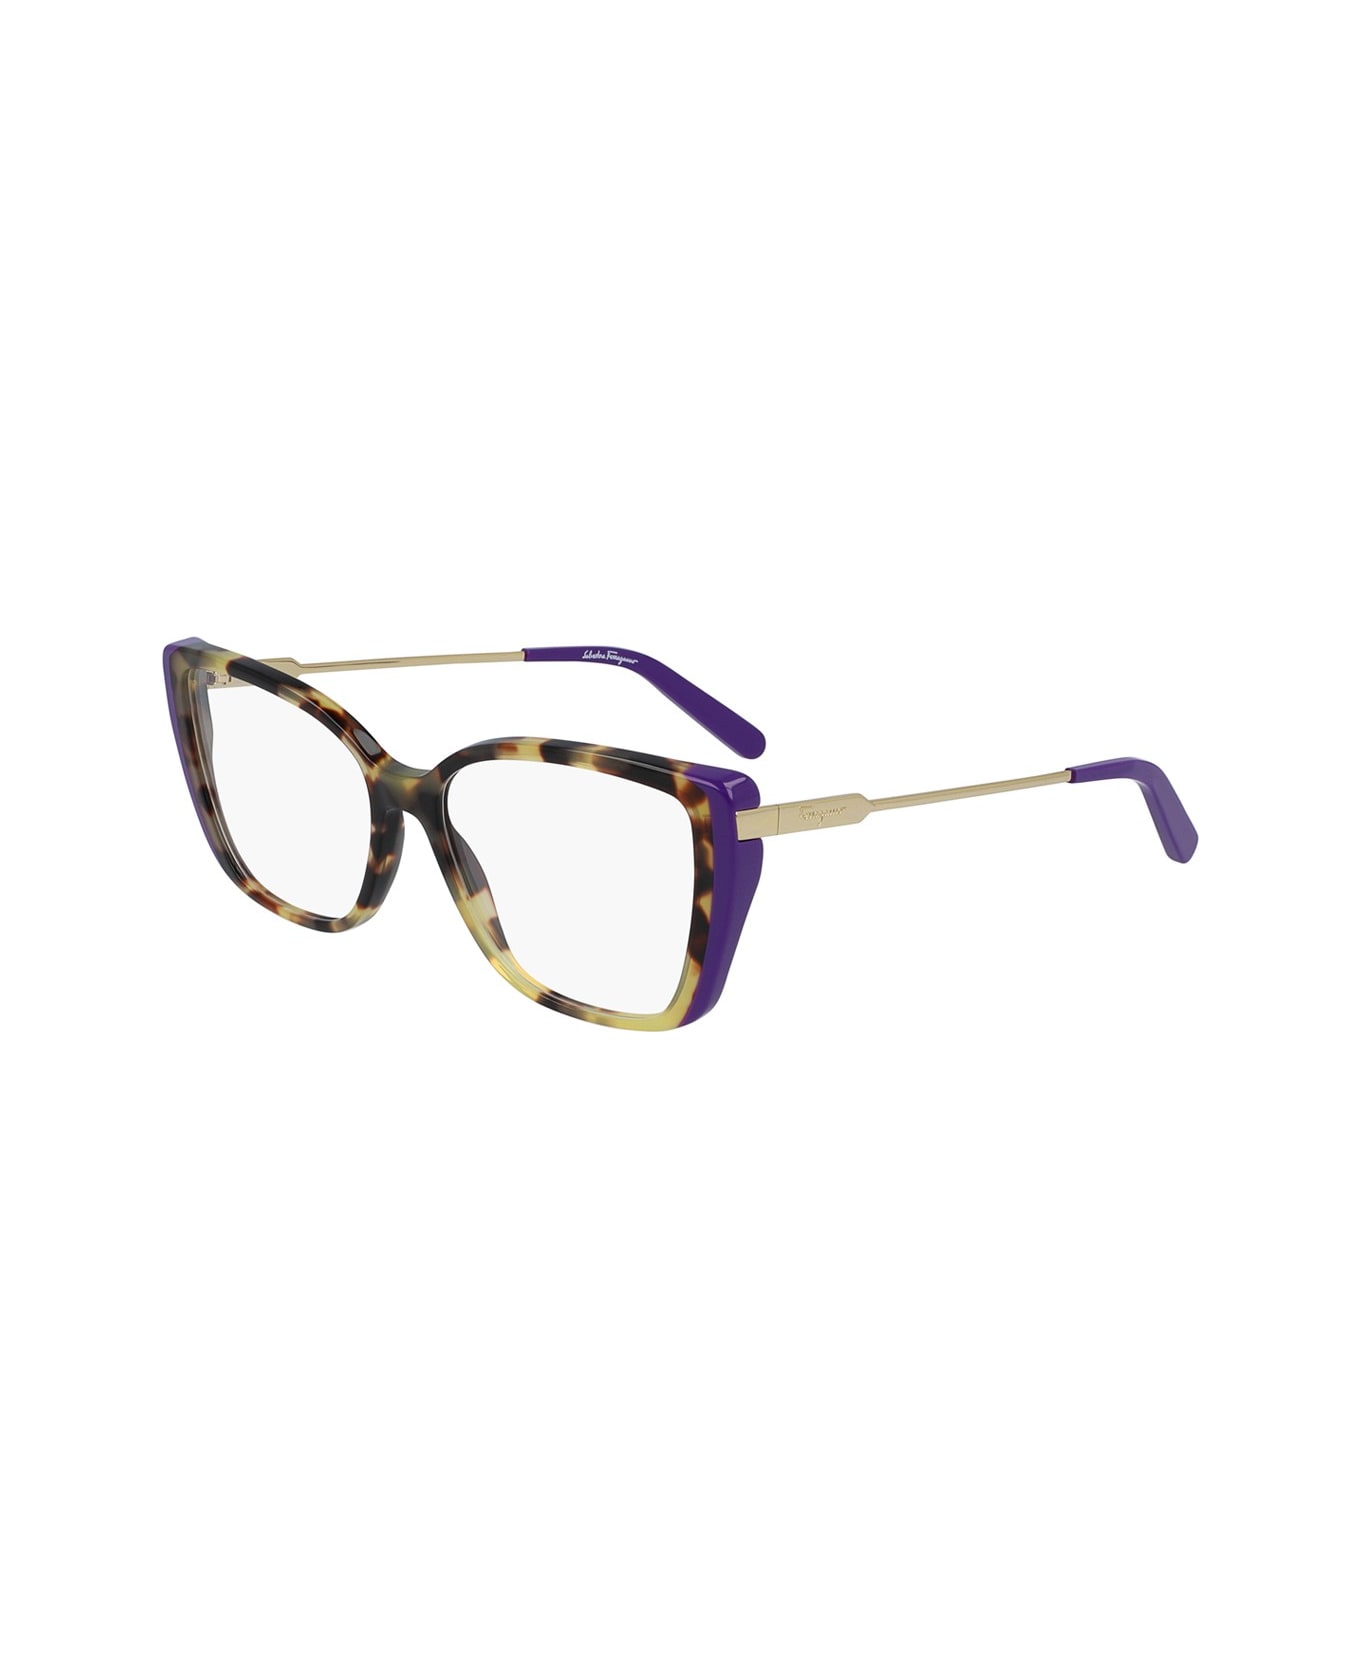 Salvatore Ferragamo Eyewear Sf2850 Glasses - Viola